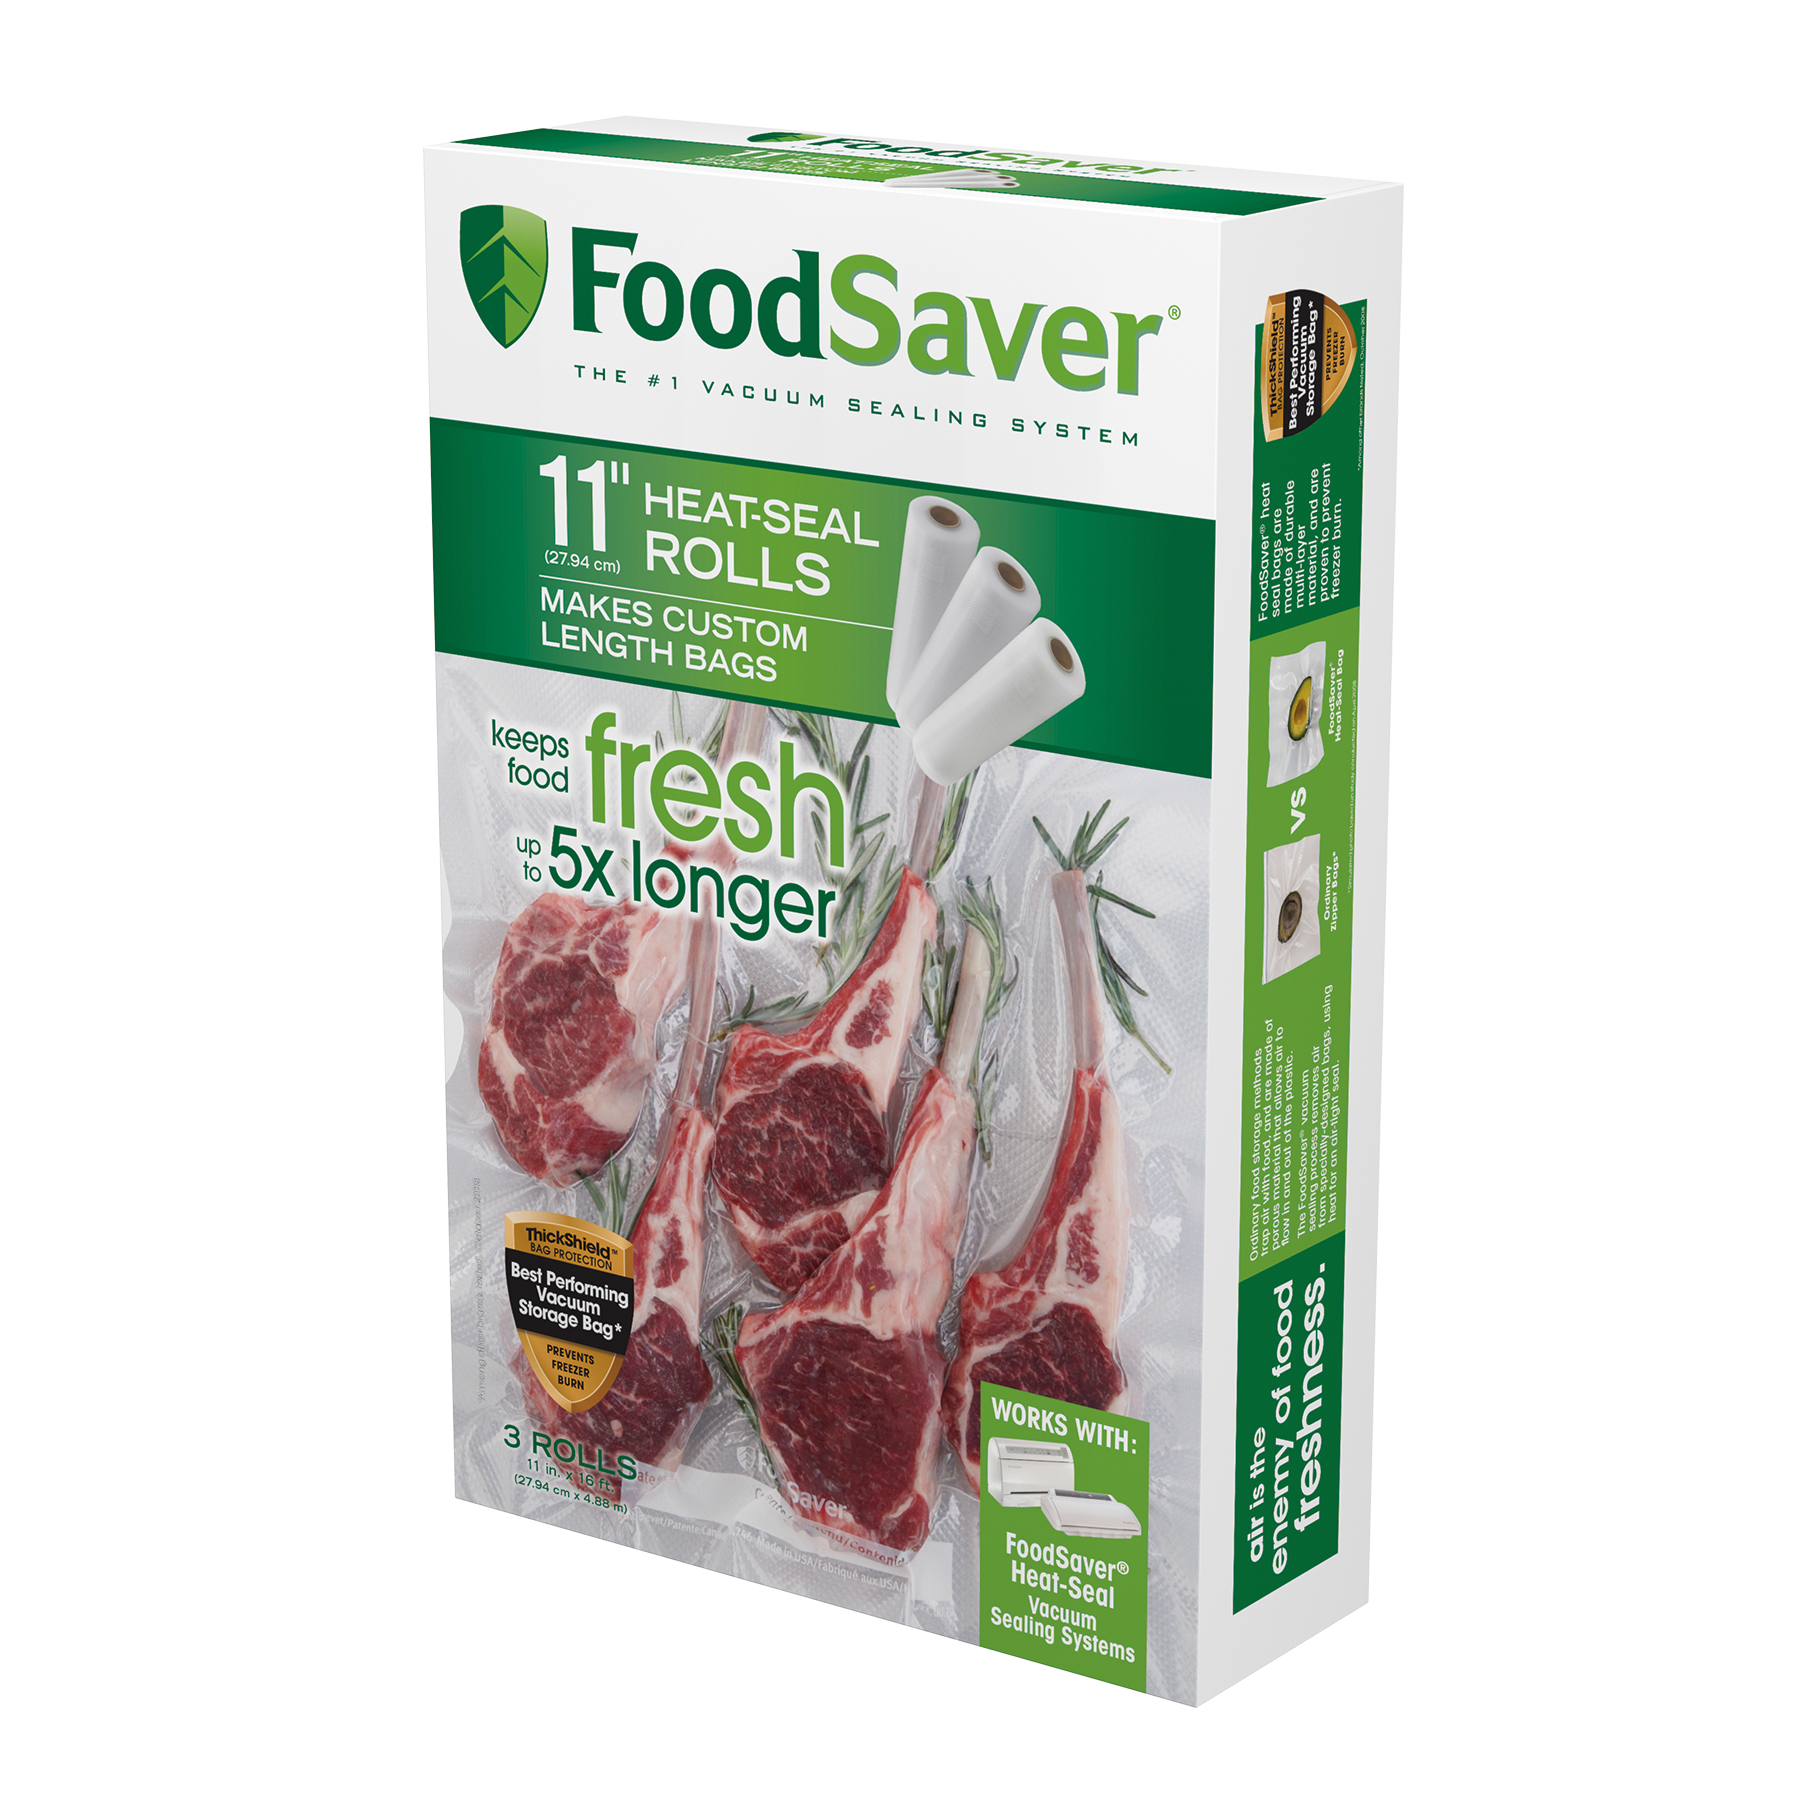 Foodsaver FSFSBF0634-DS 11" Heat Seal Roll 3-Pack